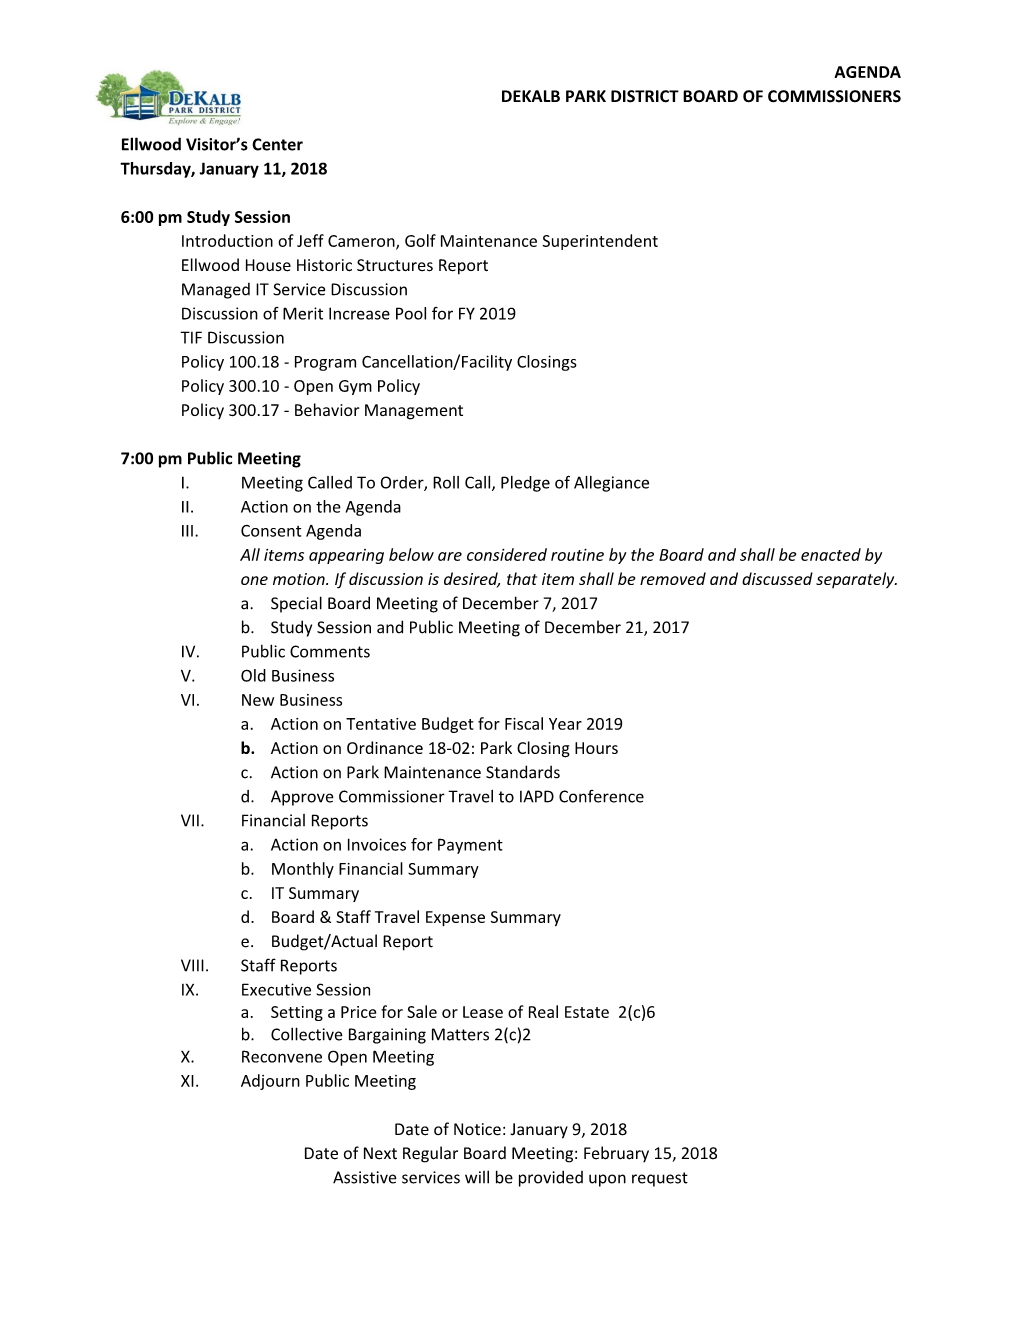 Agenda Dekalb Park District Board of Commissioners